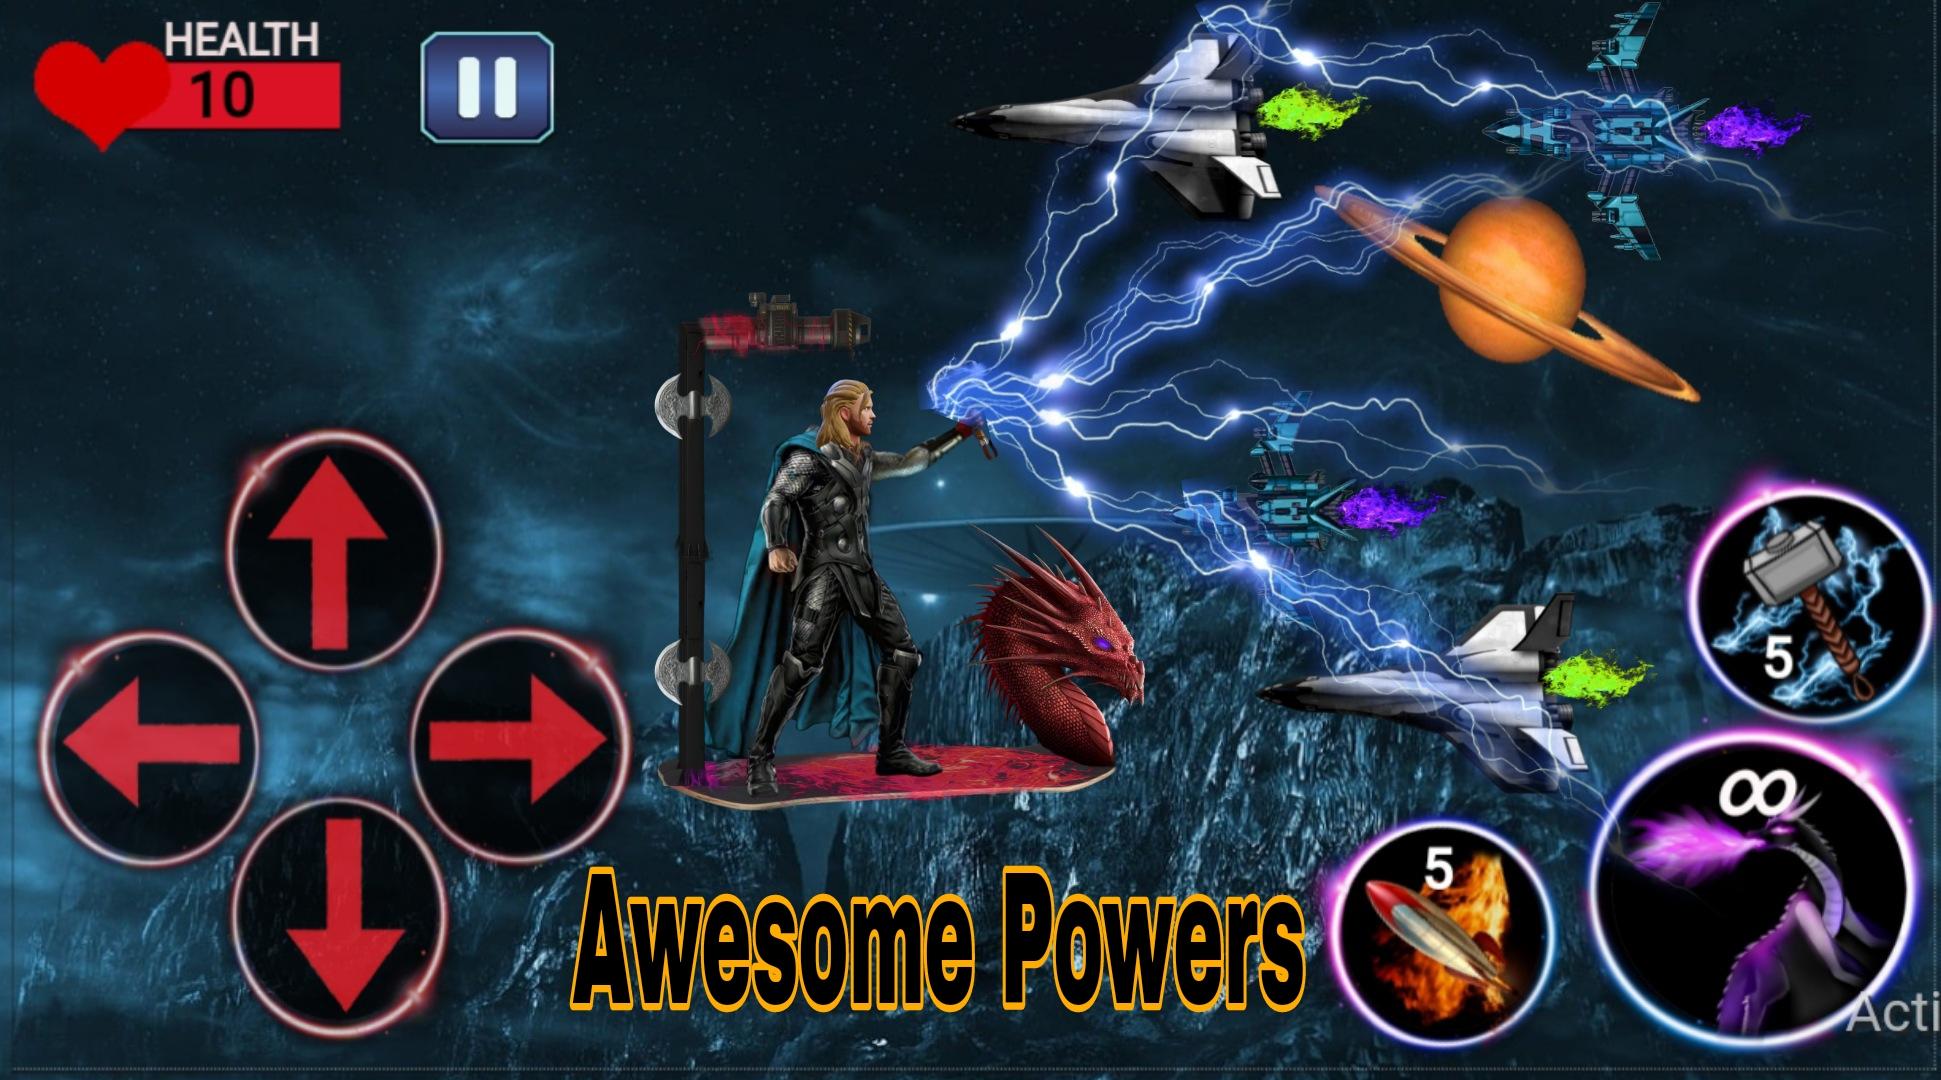 Thor Ragnarok APK for Android Download